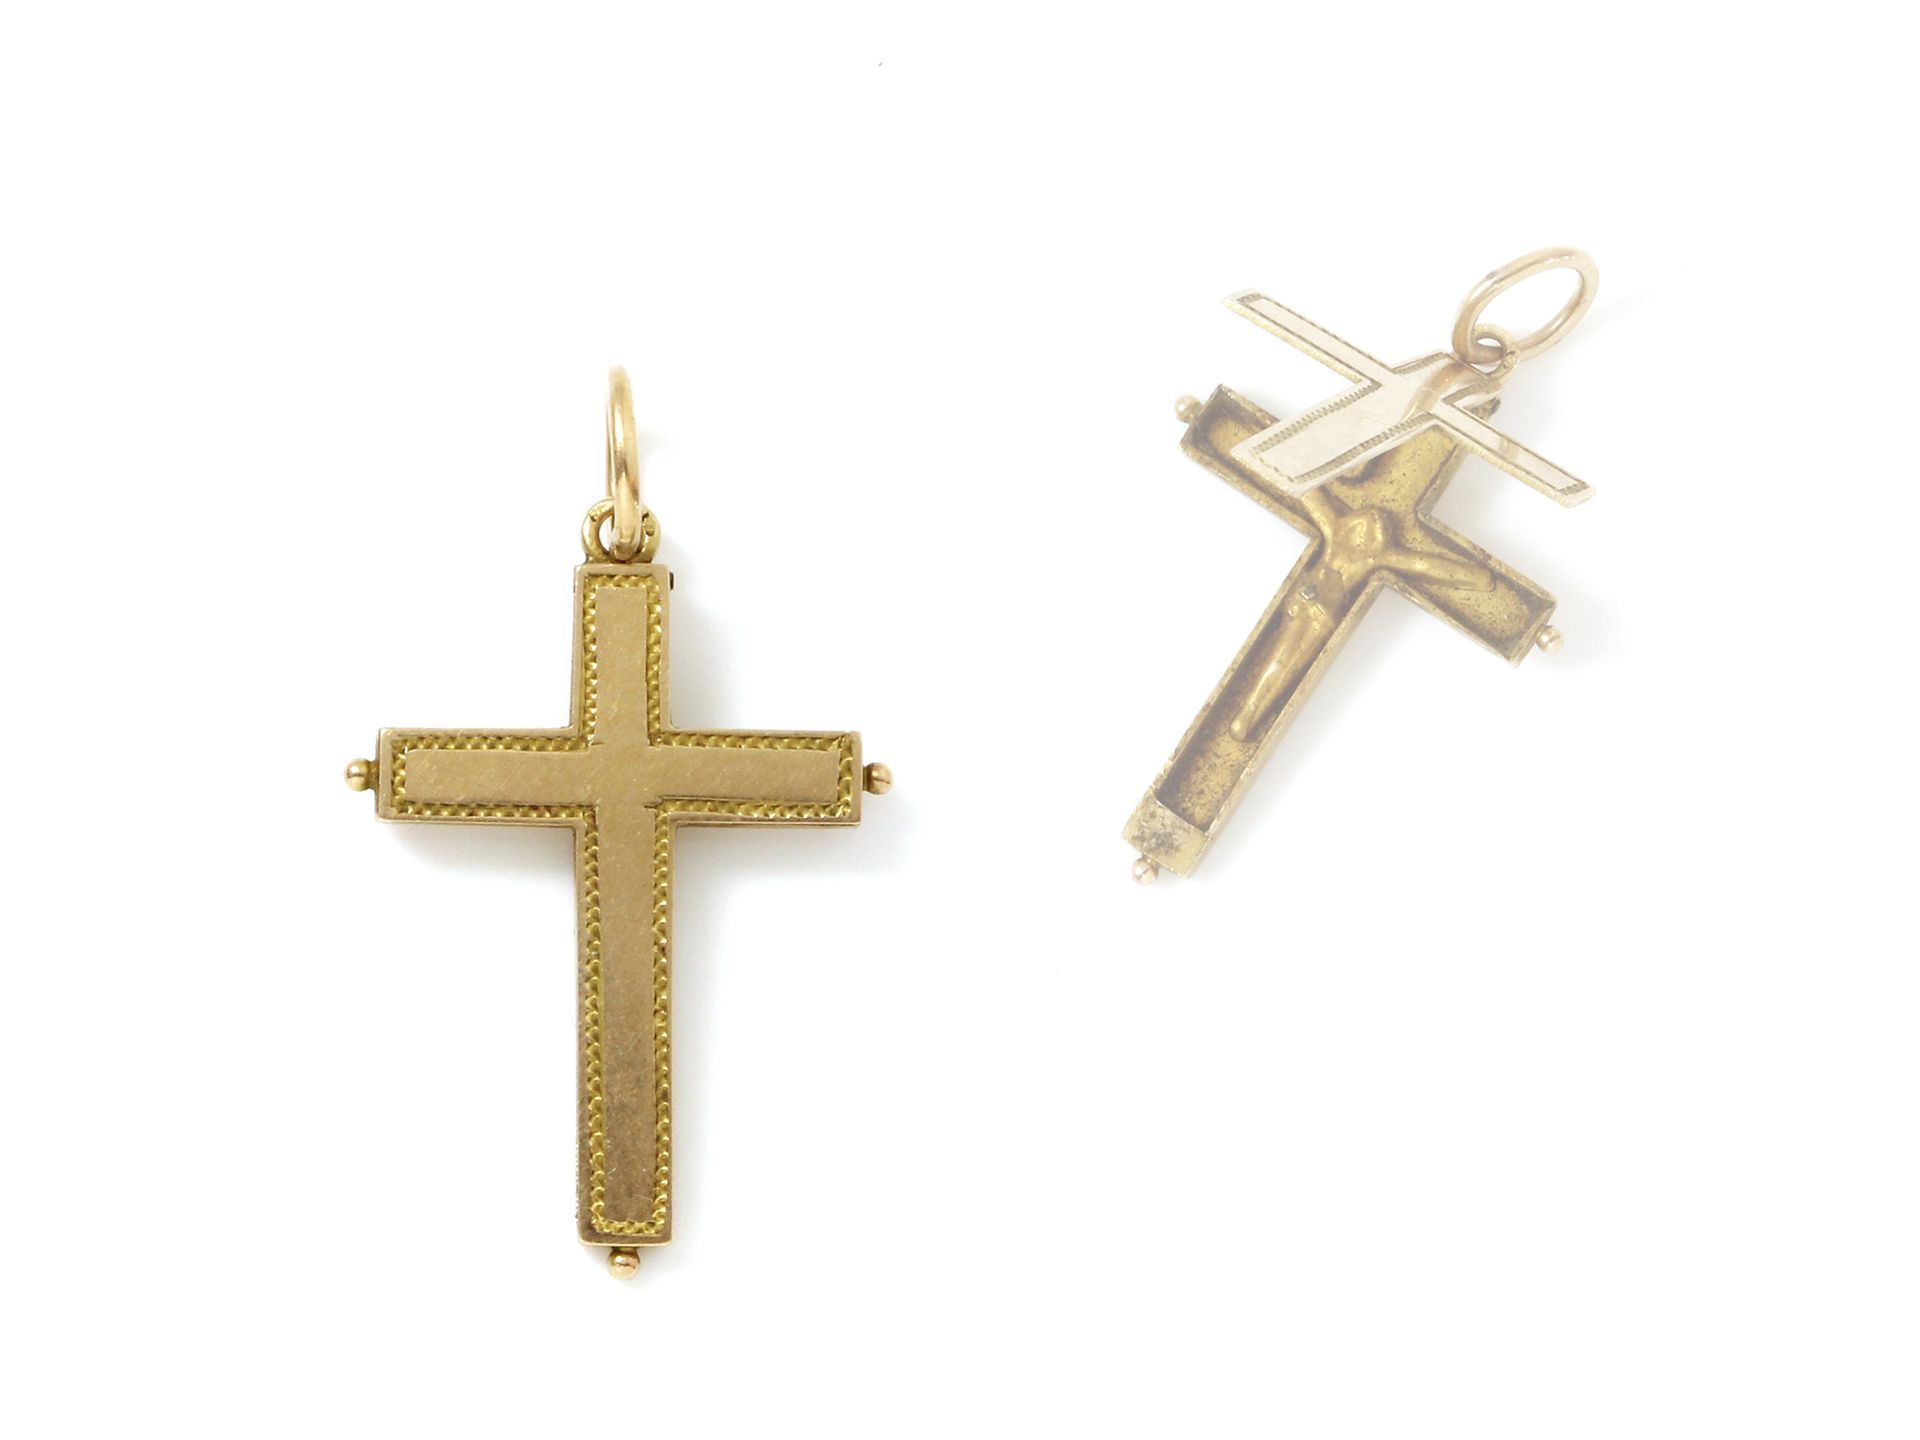 Null 七十五万分之一的黄金吊坠，代表一个用铰链打开的十字架，露出一个基督。带悬挂环。

毛重：1.90克。尺寸：高2.5 x 宽1.8厘米。